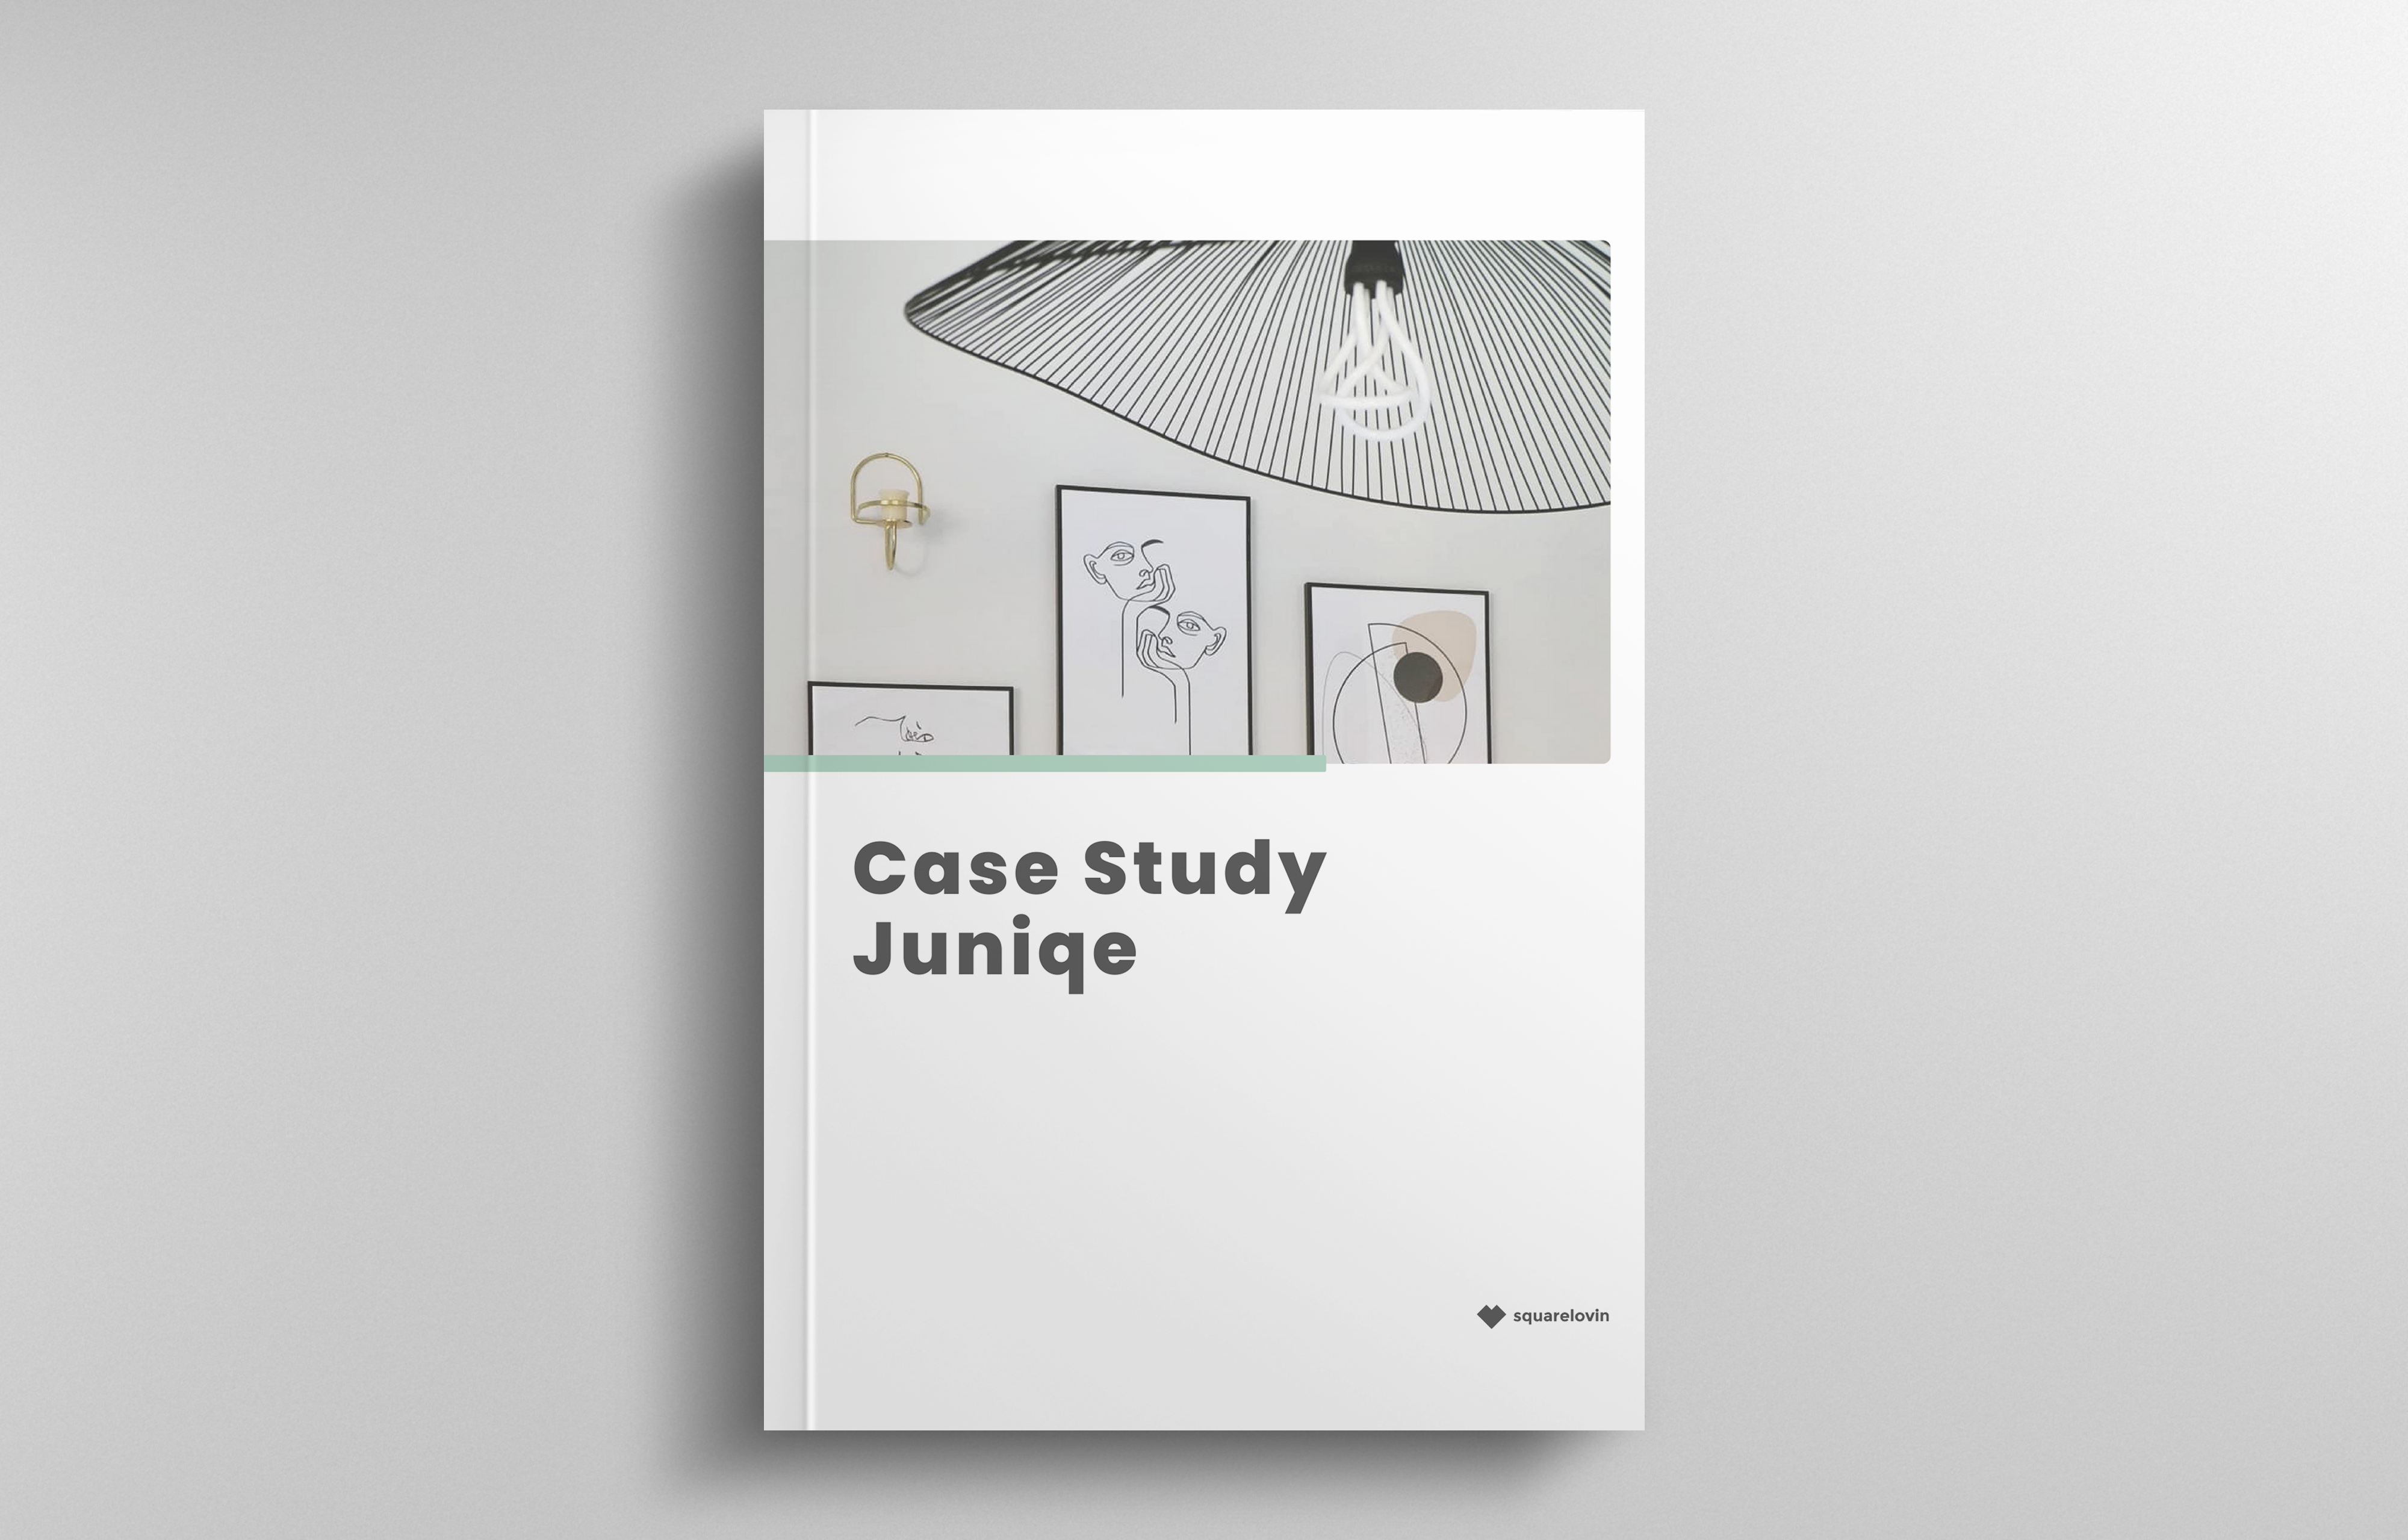 squarelovin_case-study_juniqe_header_de